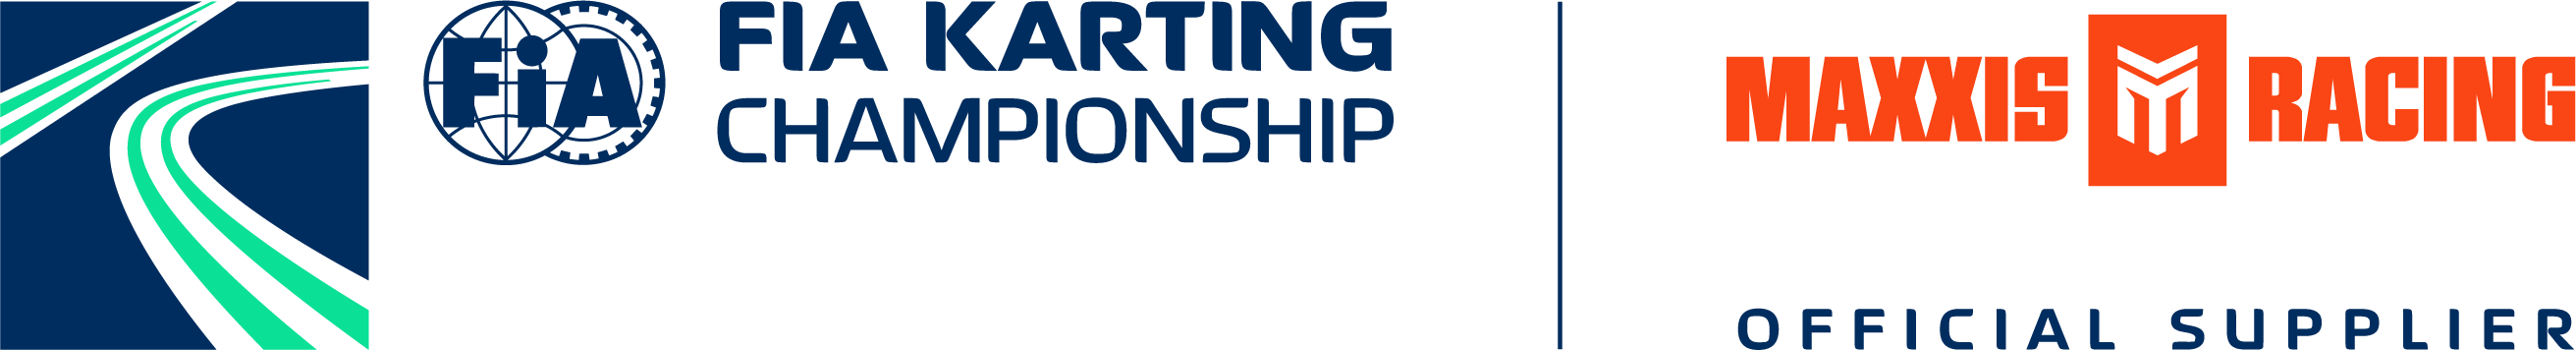 FIA Karting Championship Racing and Maxxis Racing logos